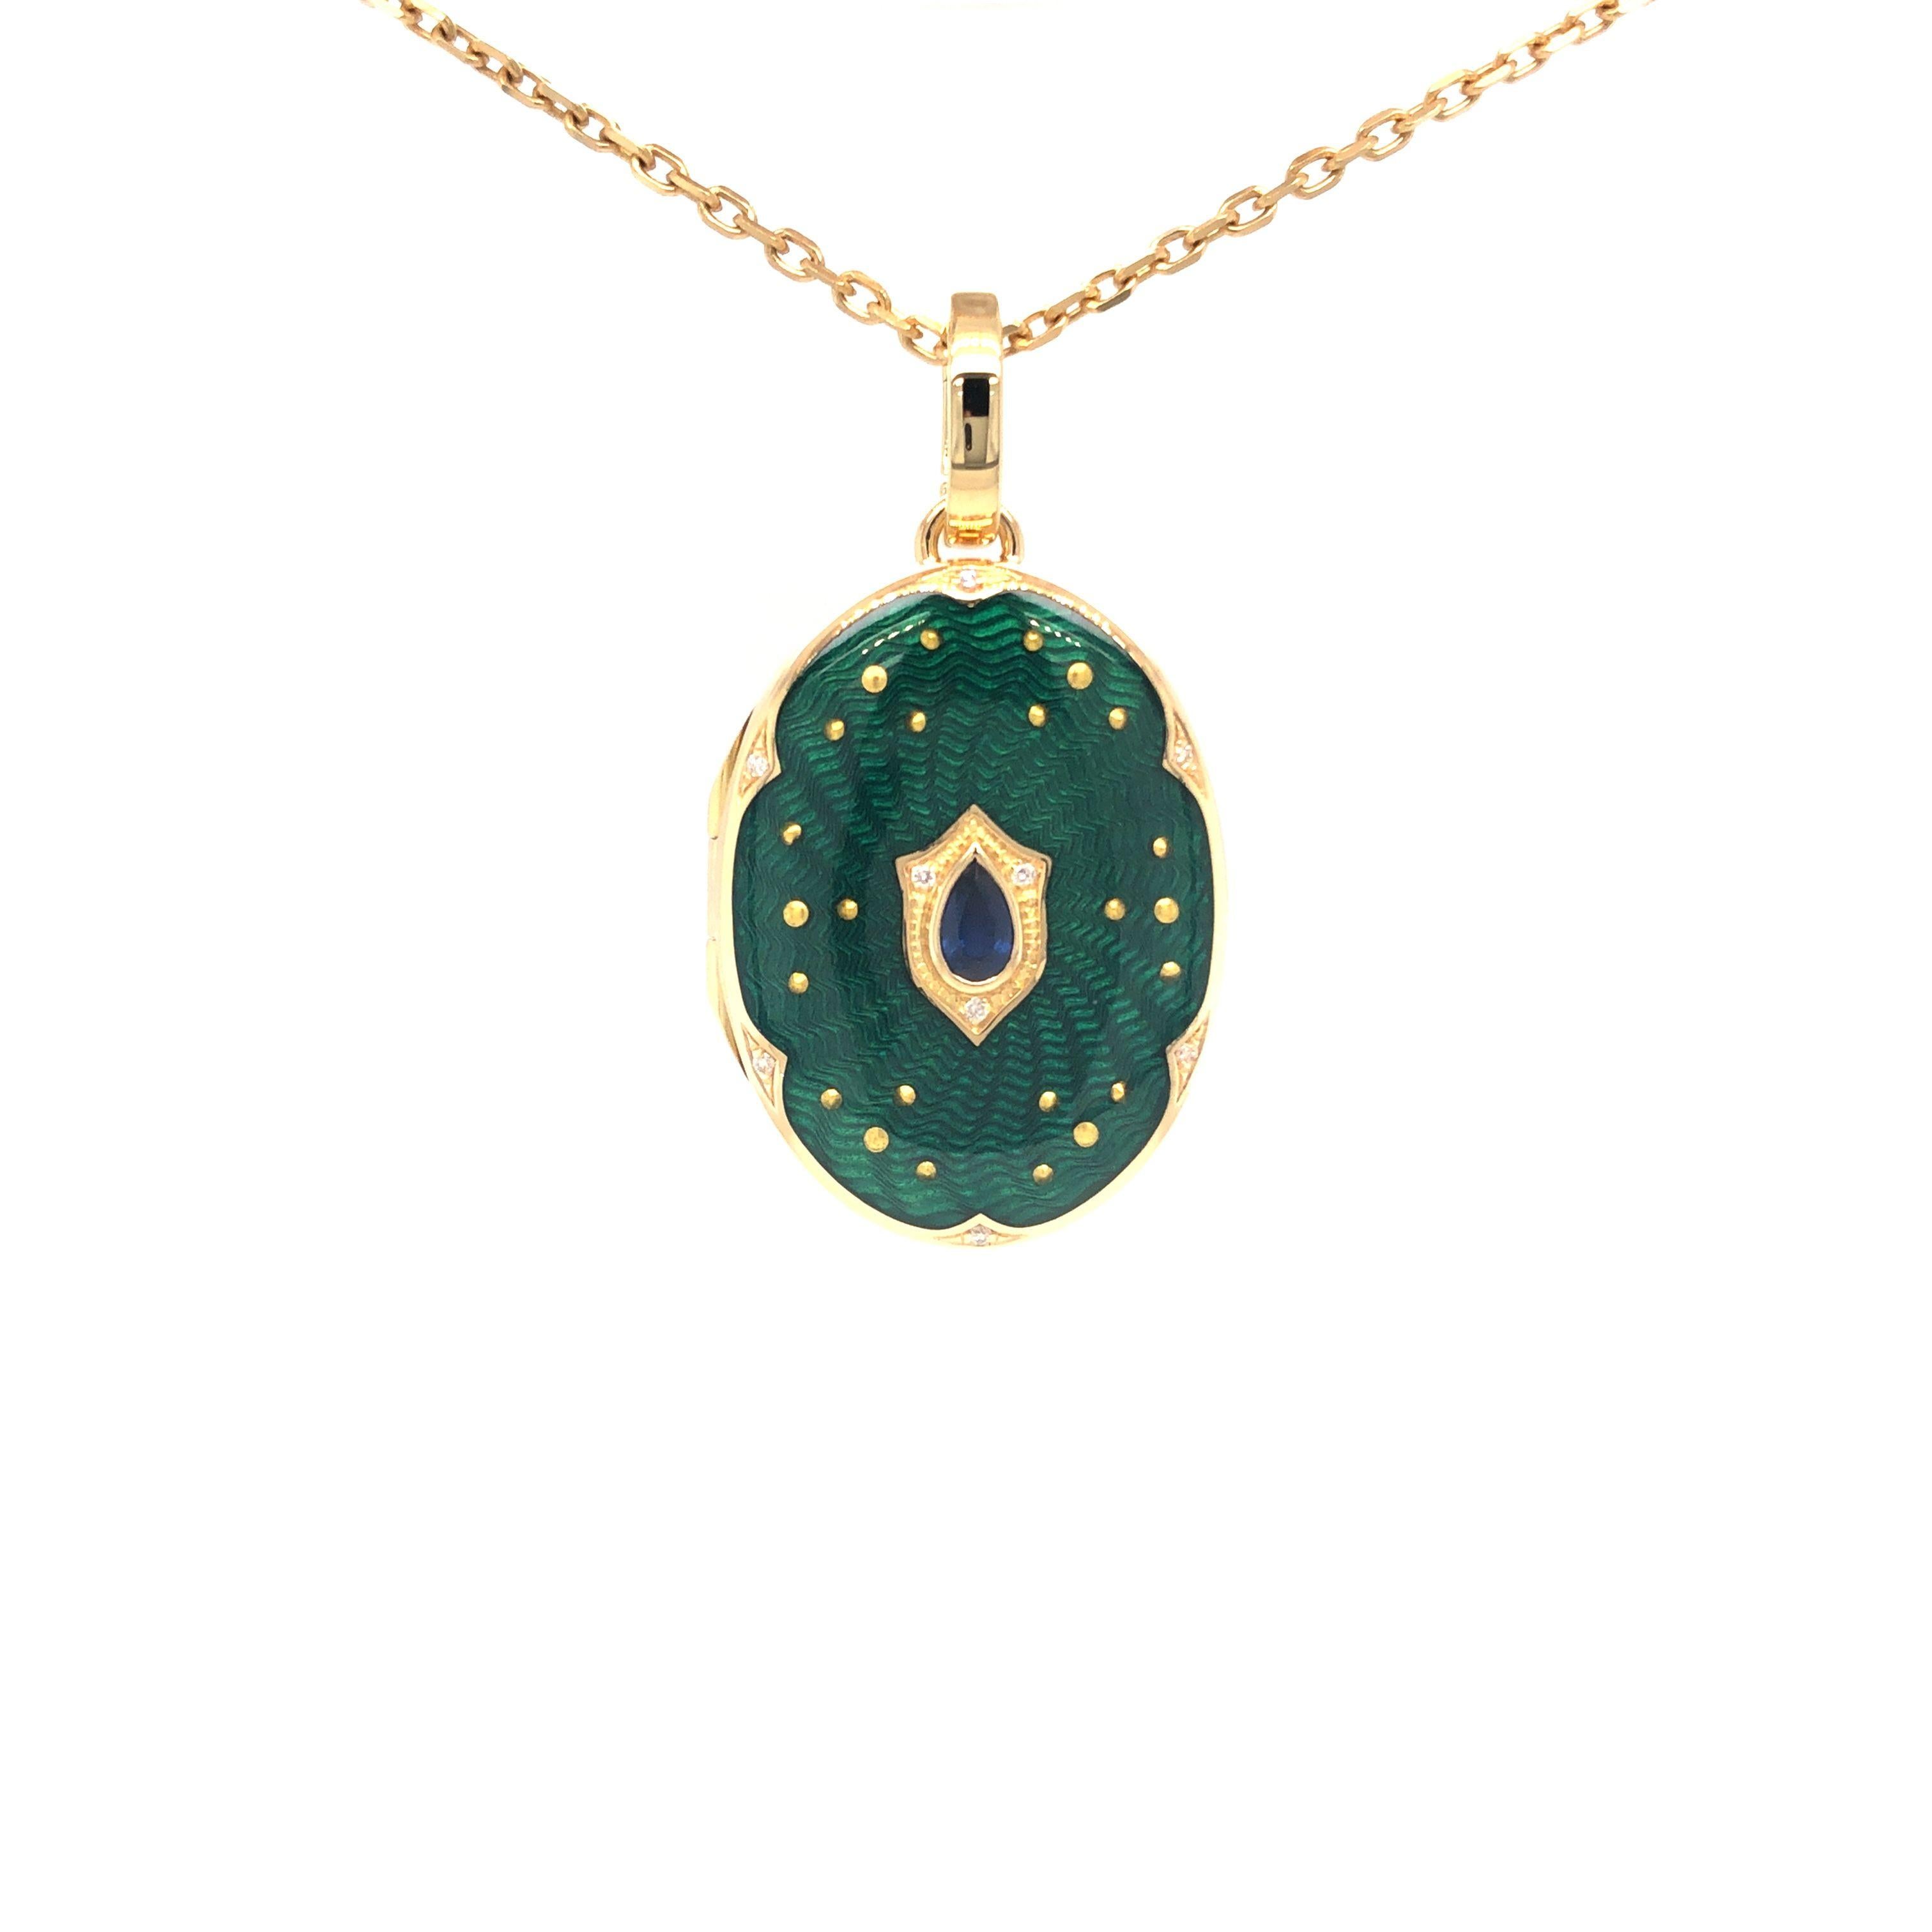 Victor Mayer customizable oval locket pendant necklace, 18k Yellow gold, translucent royal blue vitreous enamel, gold paillons, 9 diamonds total 0.04 ct, G VS brilliant cut, 1 pear shaped blue sapphire, measurements app. 27.0 x 38.0 mm

About the